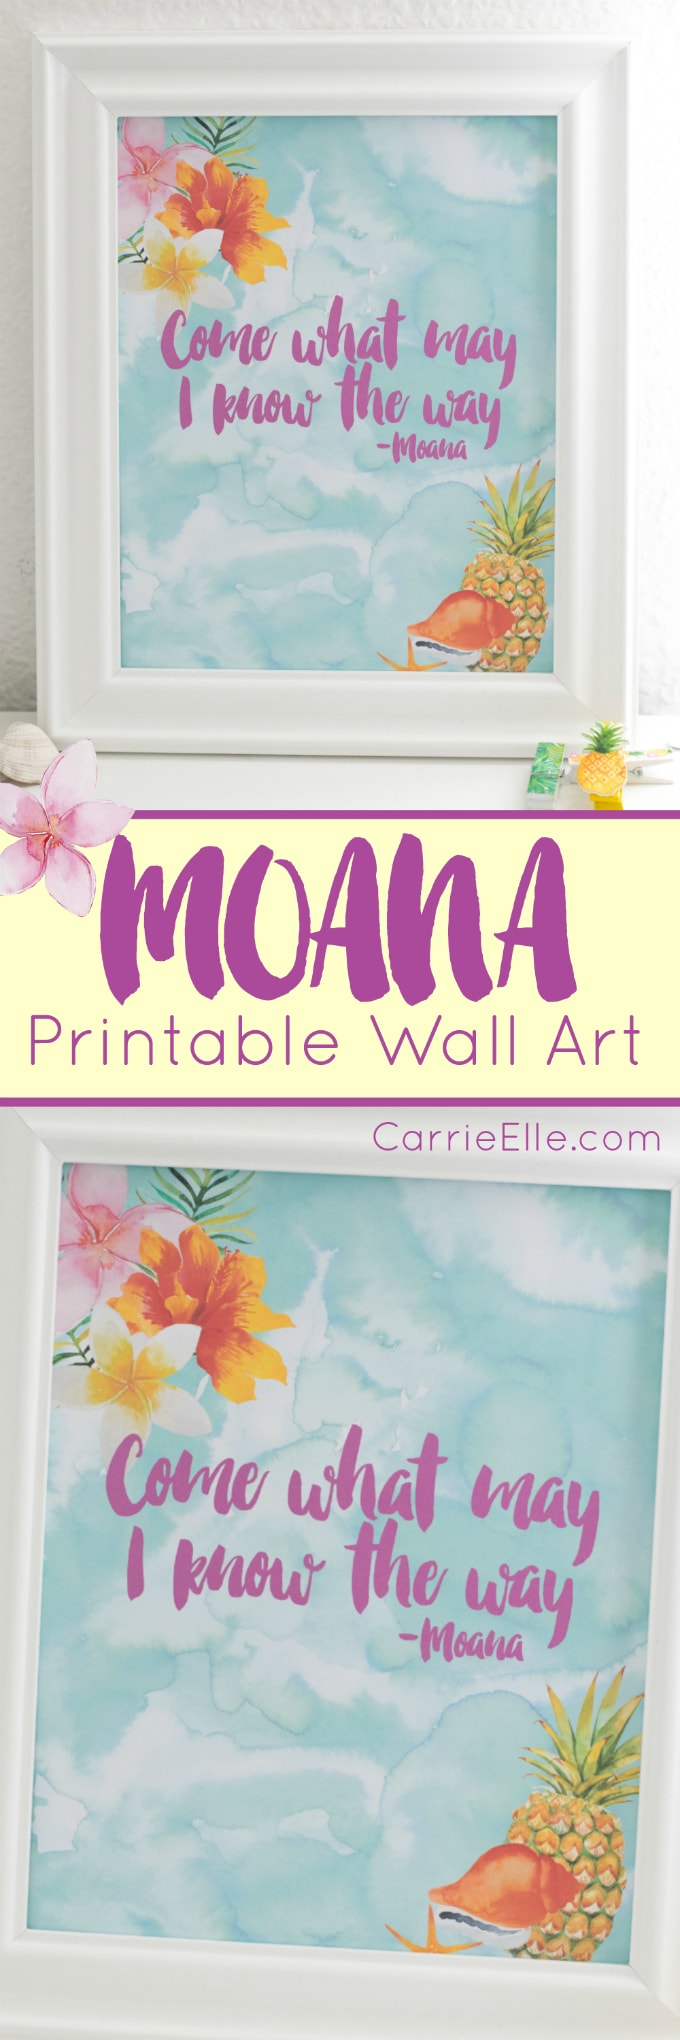 Moana Printable Wall Art